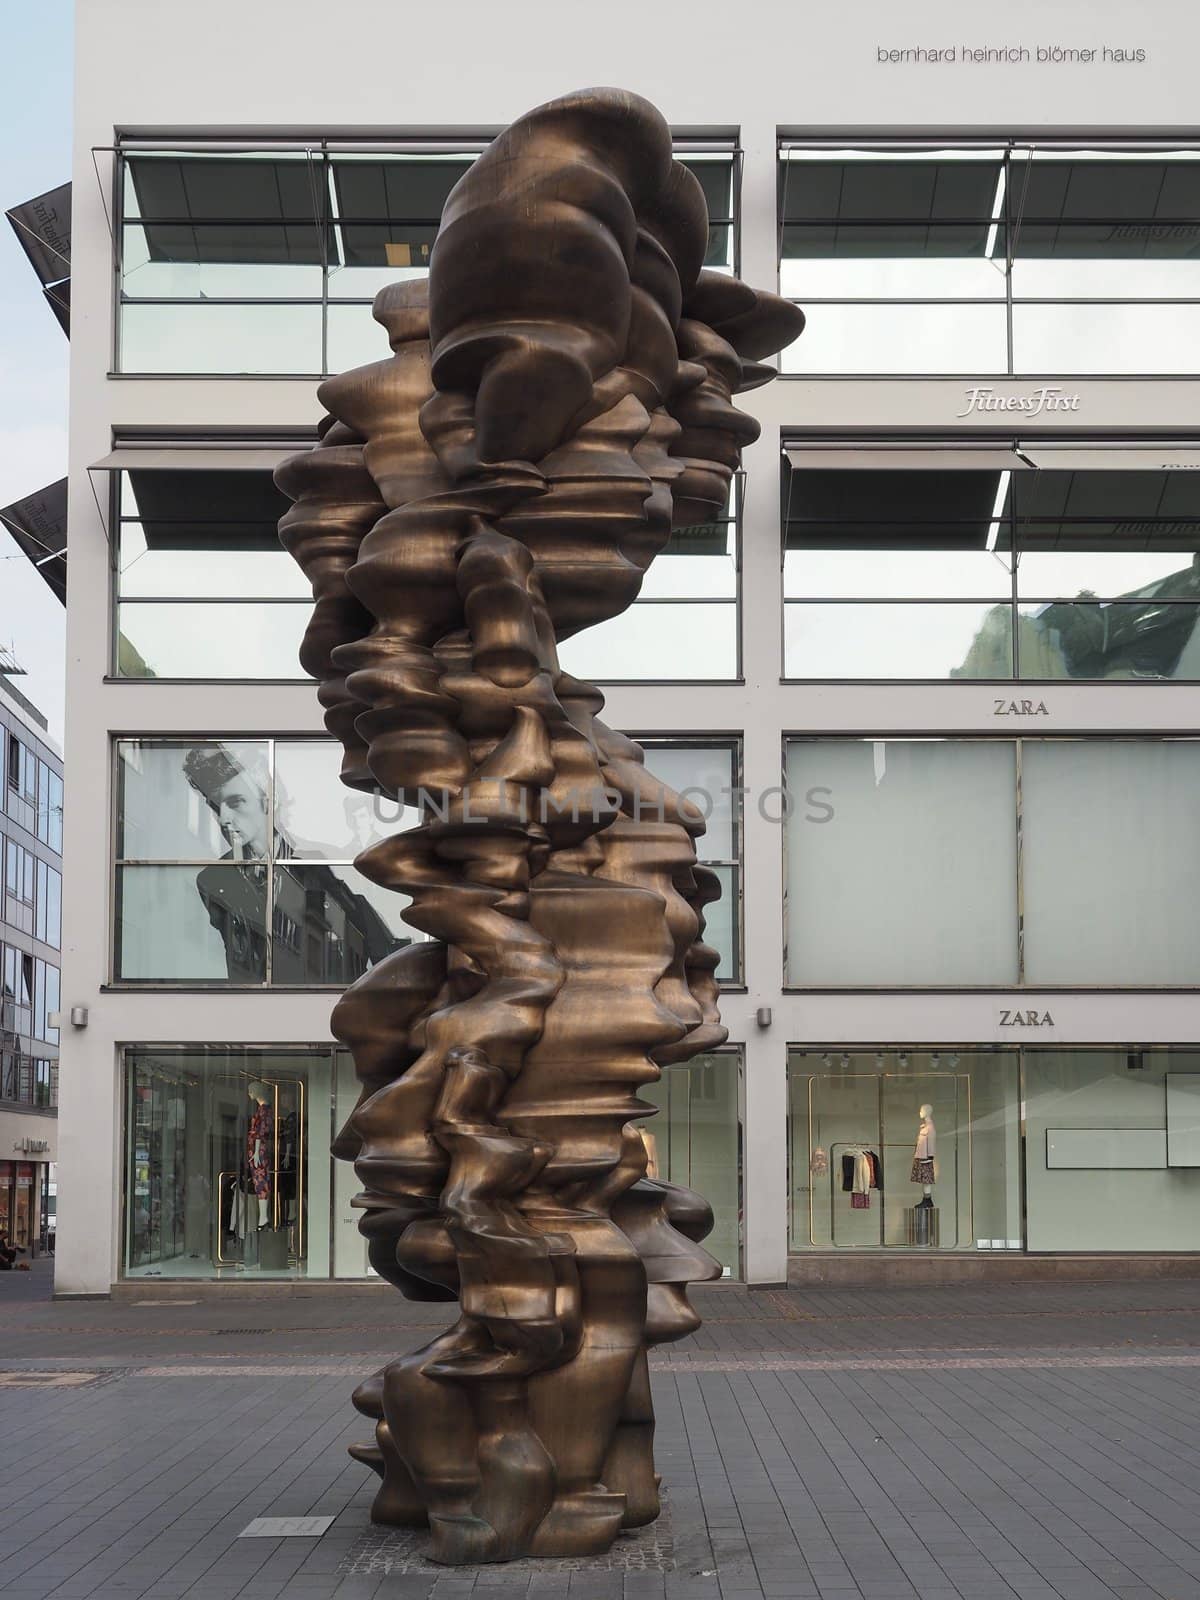 BONN, GERMANY - CIRCA AUGUST 2019: Mean Average sculpture by British artist Anthony Cragg